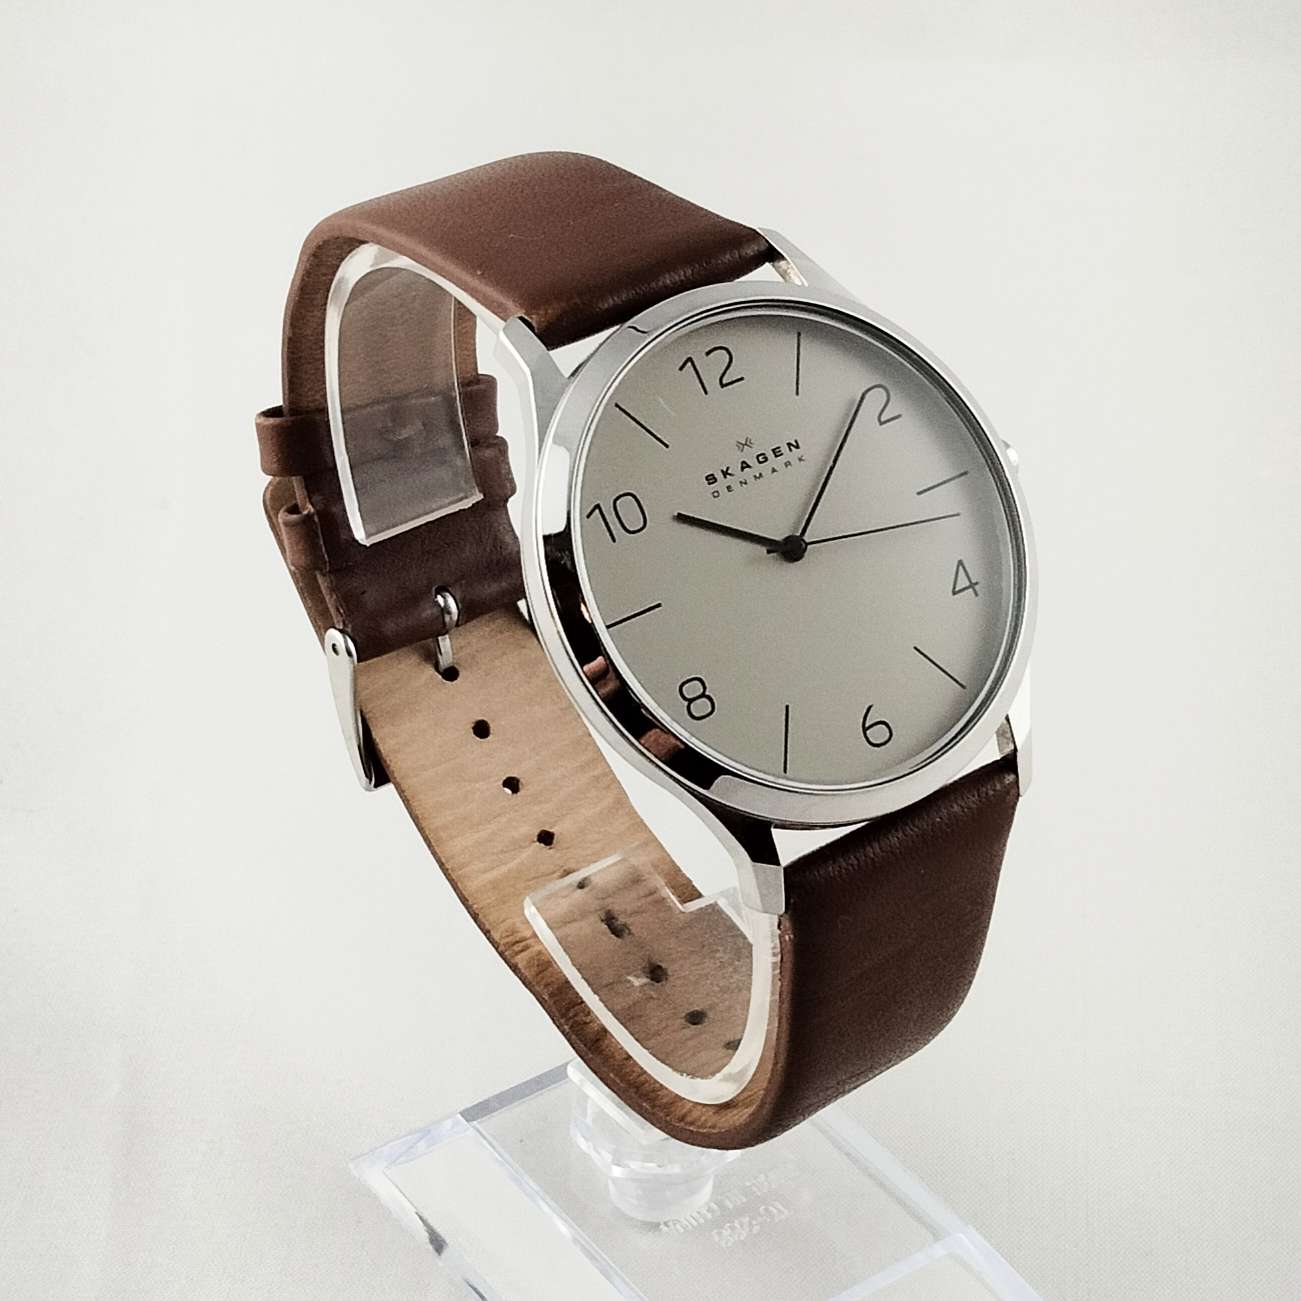 Skagen Oversized Watch, Light Grey Dial, Brown Genuine Leather Strap